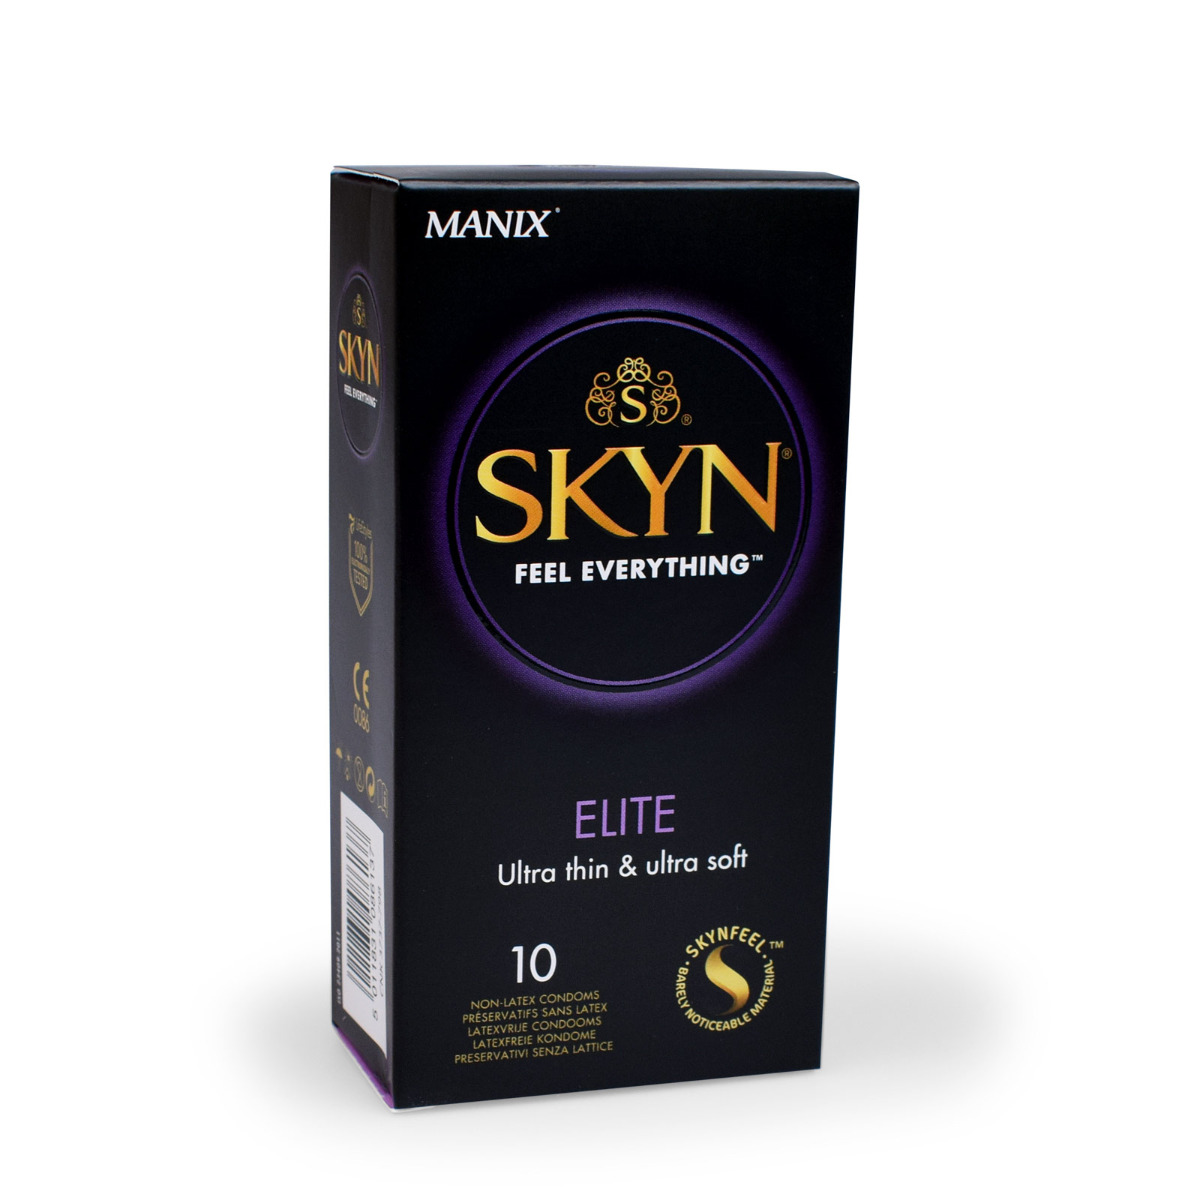 Manix Skyn Elite